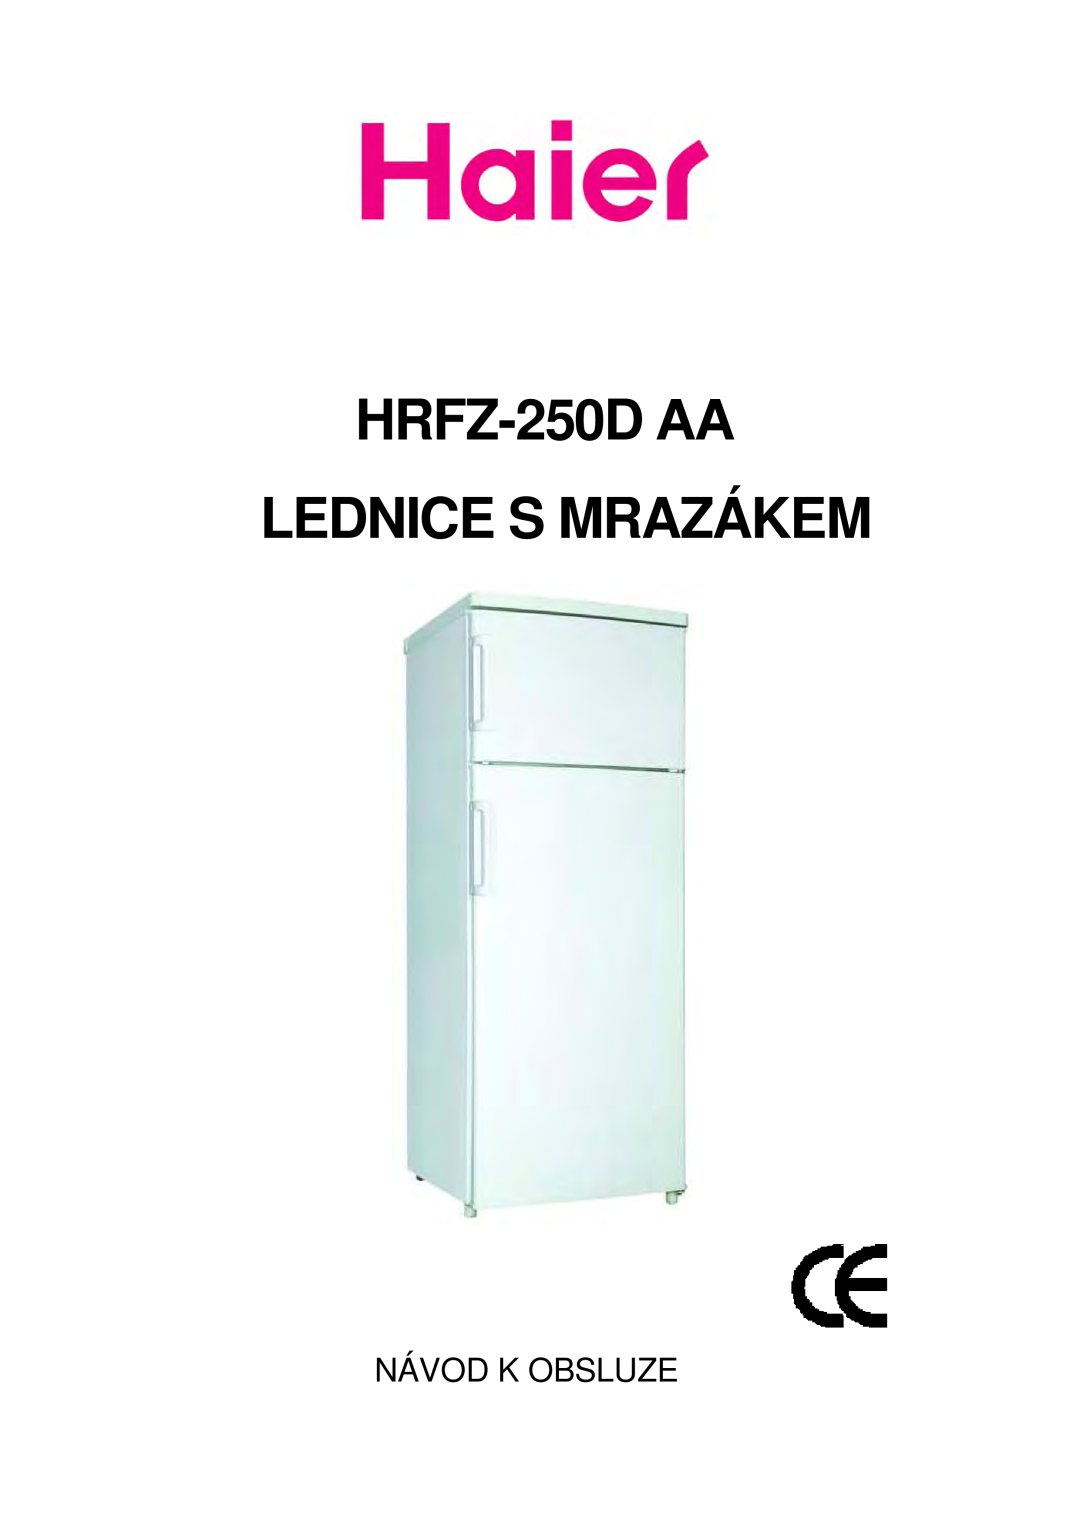 Haier HRFZ-250D AA manual HRFZ-250DAA LEDNICE S MRAZÁKEM, Návod K Obsluze 